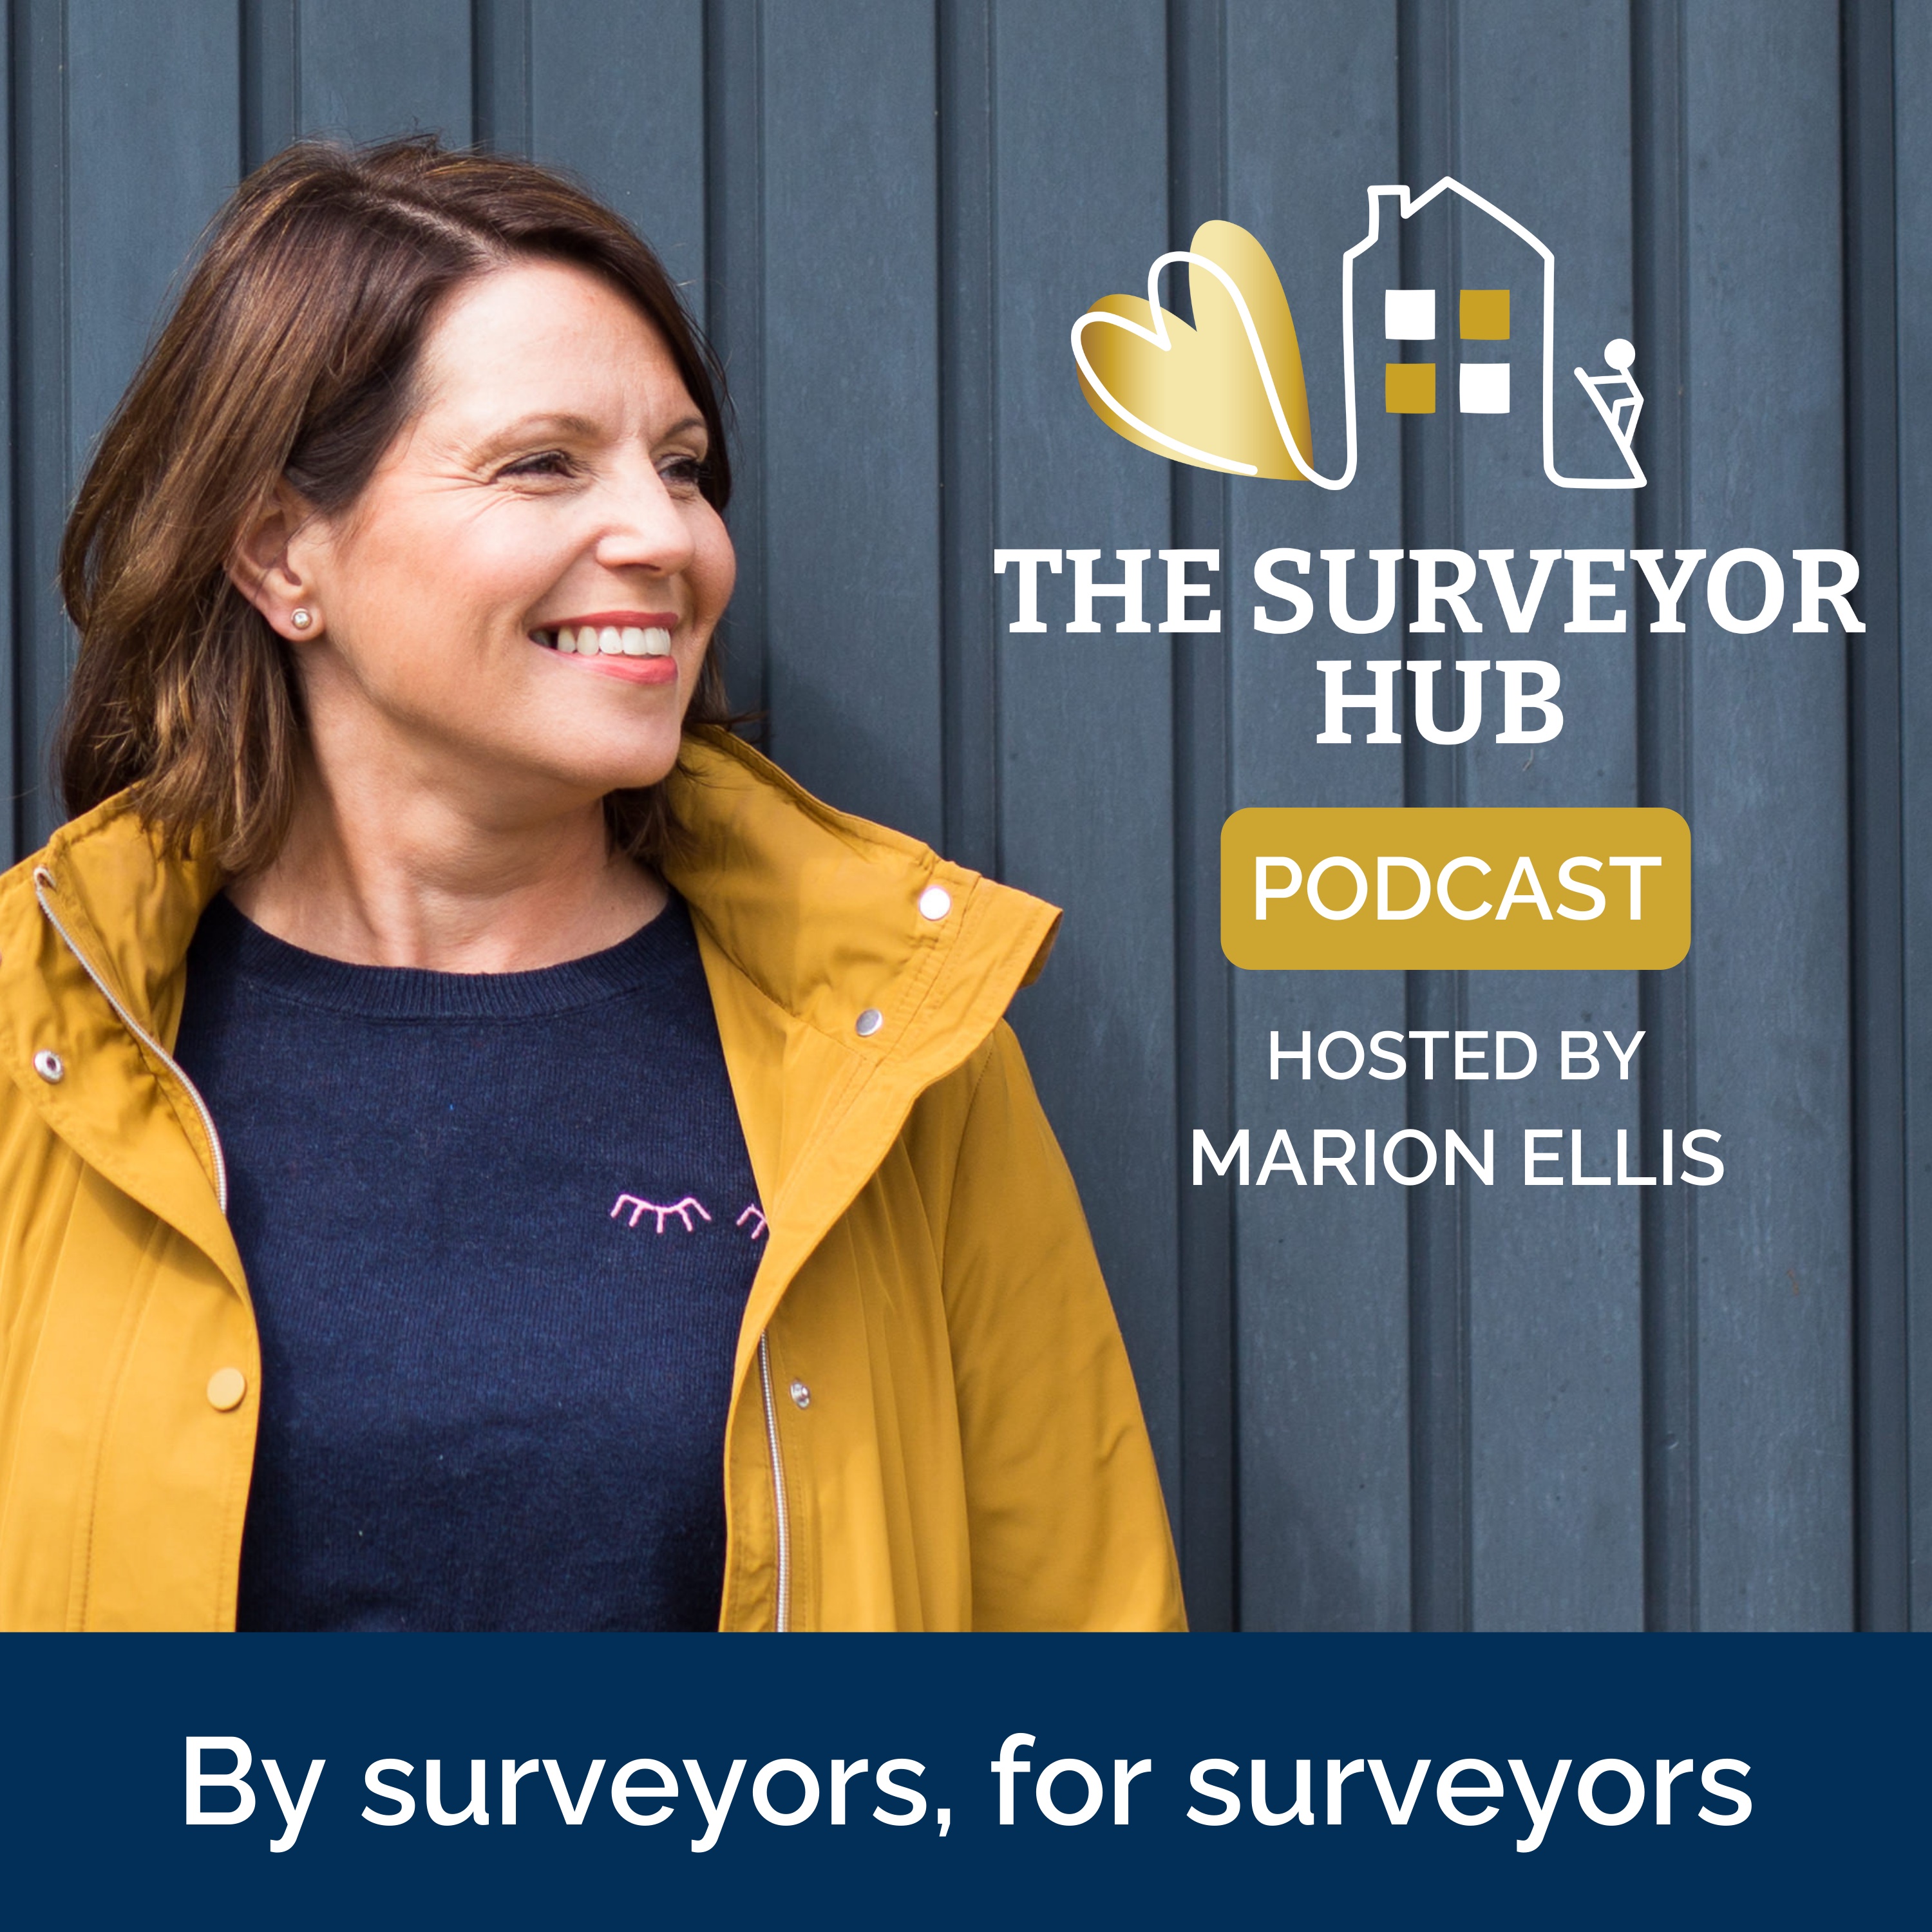 Artwork for podcast The Surveyor Hub Podcast